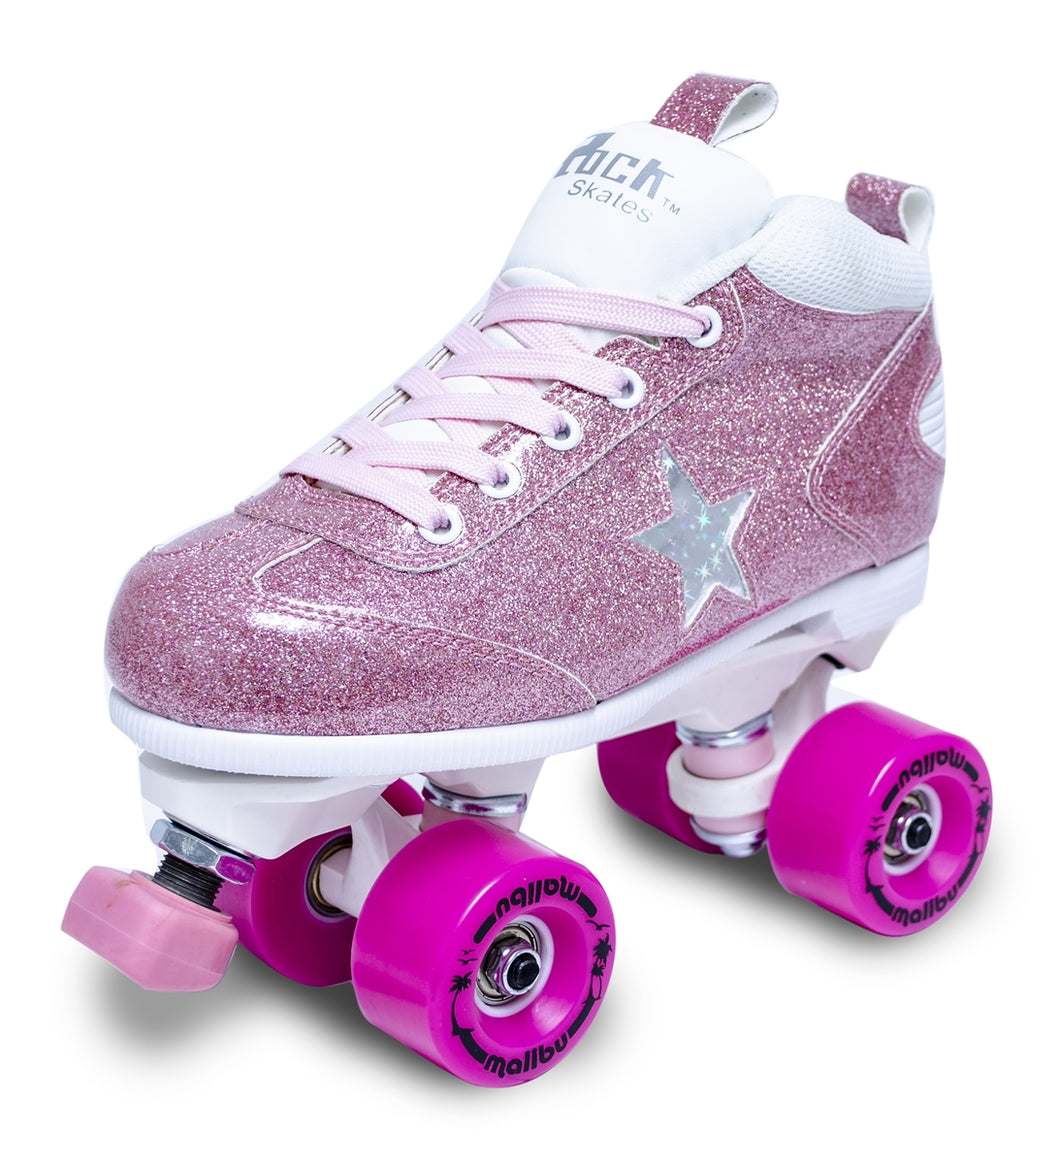 Roller Skates: Rockstar Glitter by Sure-Grip - Size 4